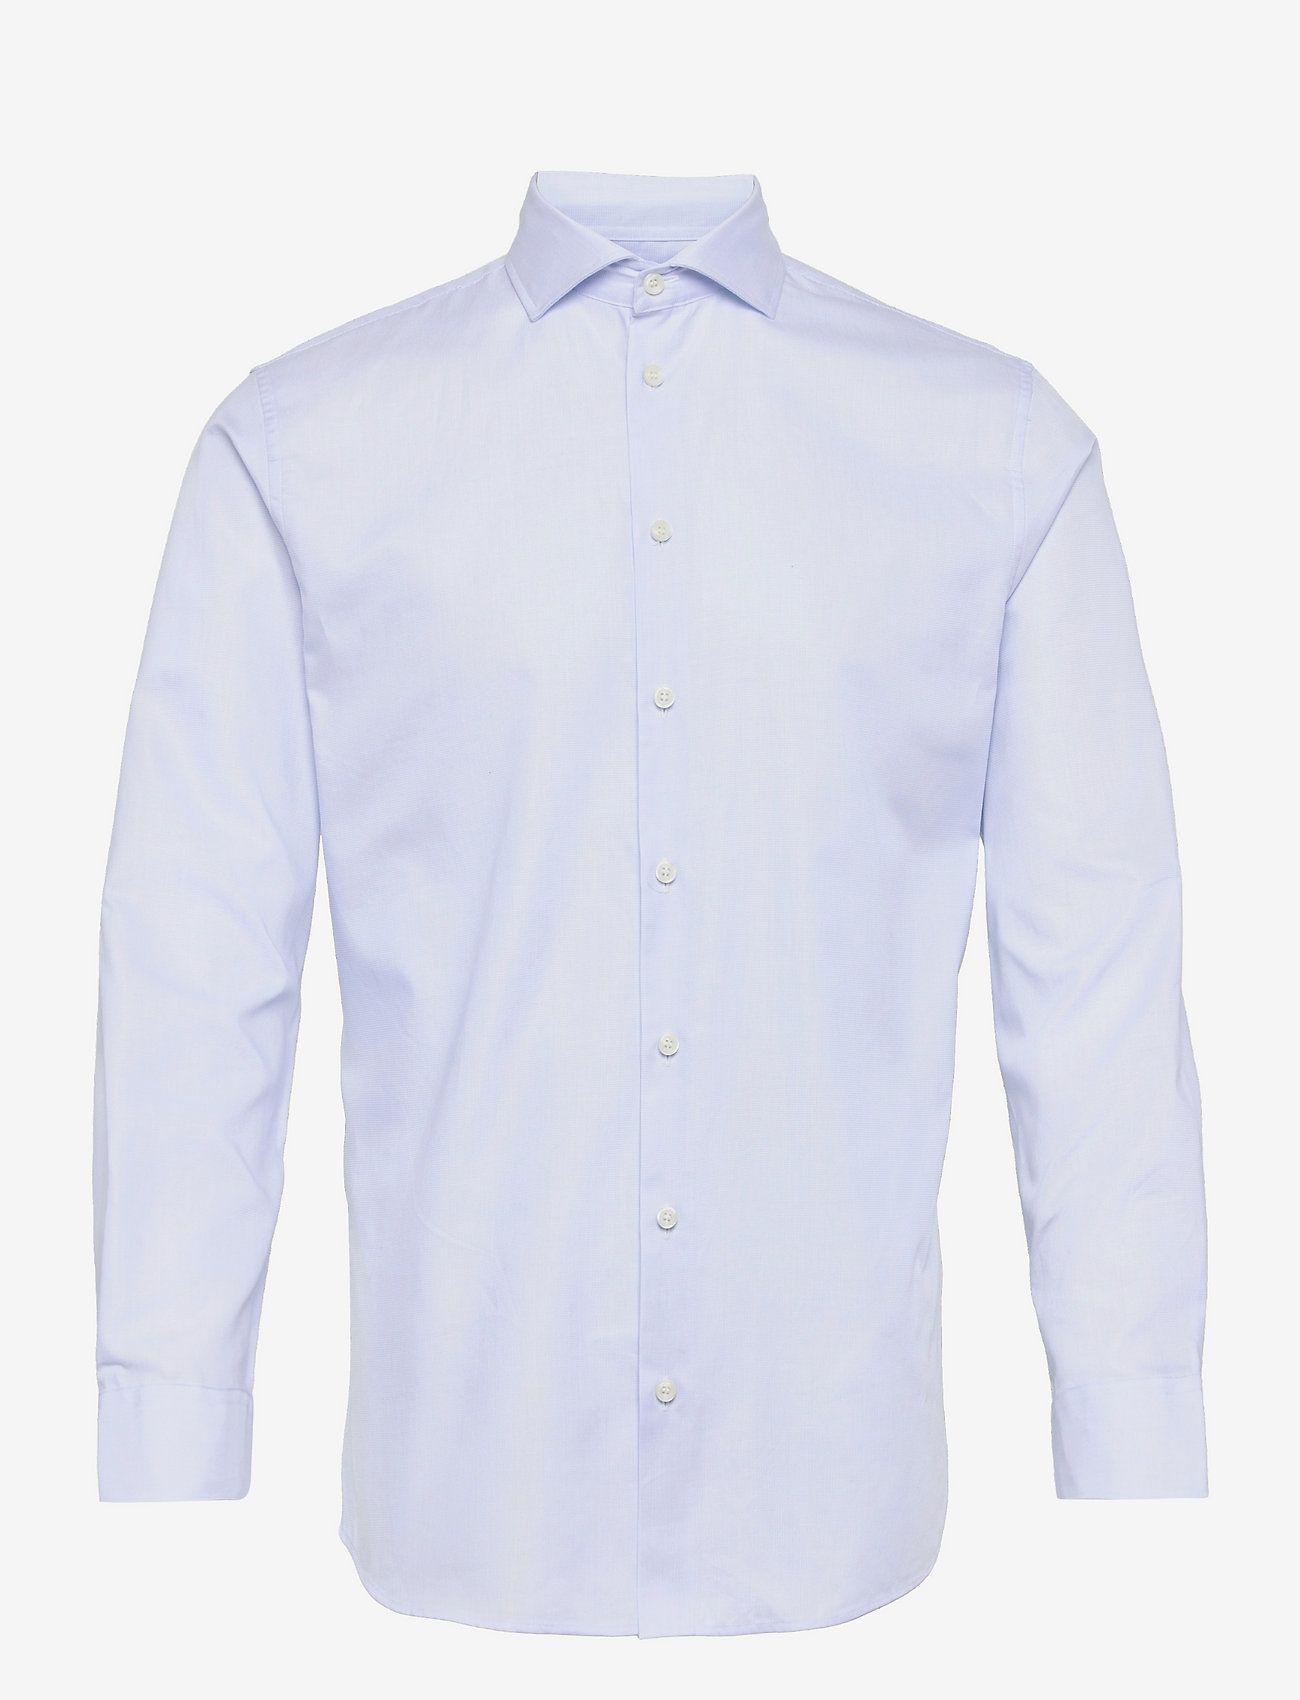 Selected Homme - SLHSLIM-ETHAN SHIRT LS CUT AWAY NOOS - basic skjortor - light blue - 0